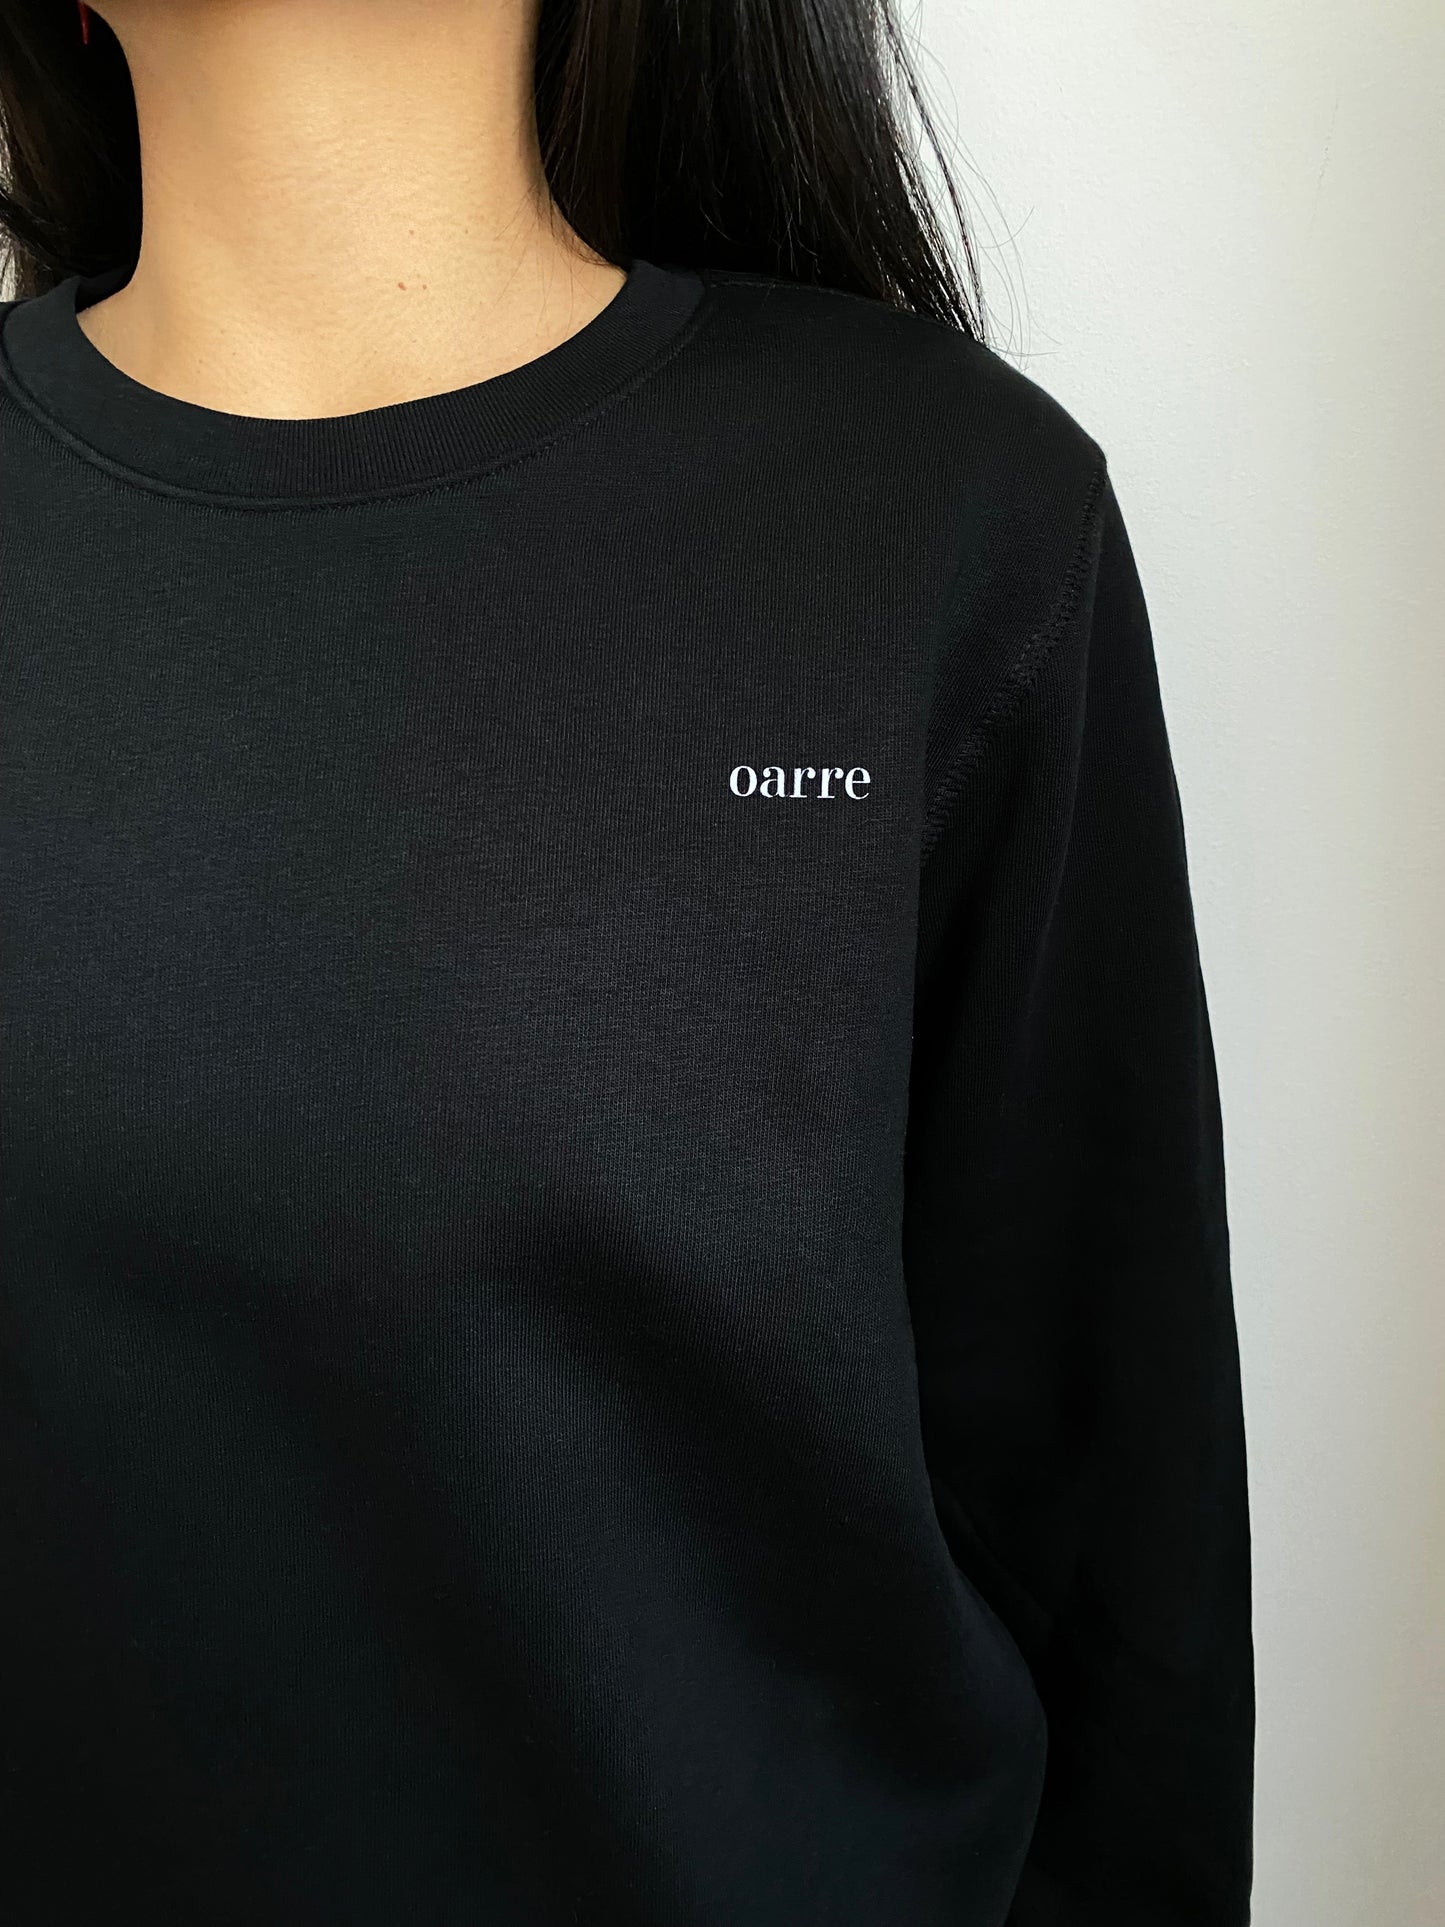 oarre - Sustainable Unisex Crewneck Sweatshirt Black